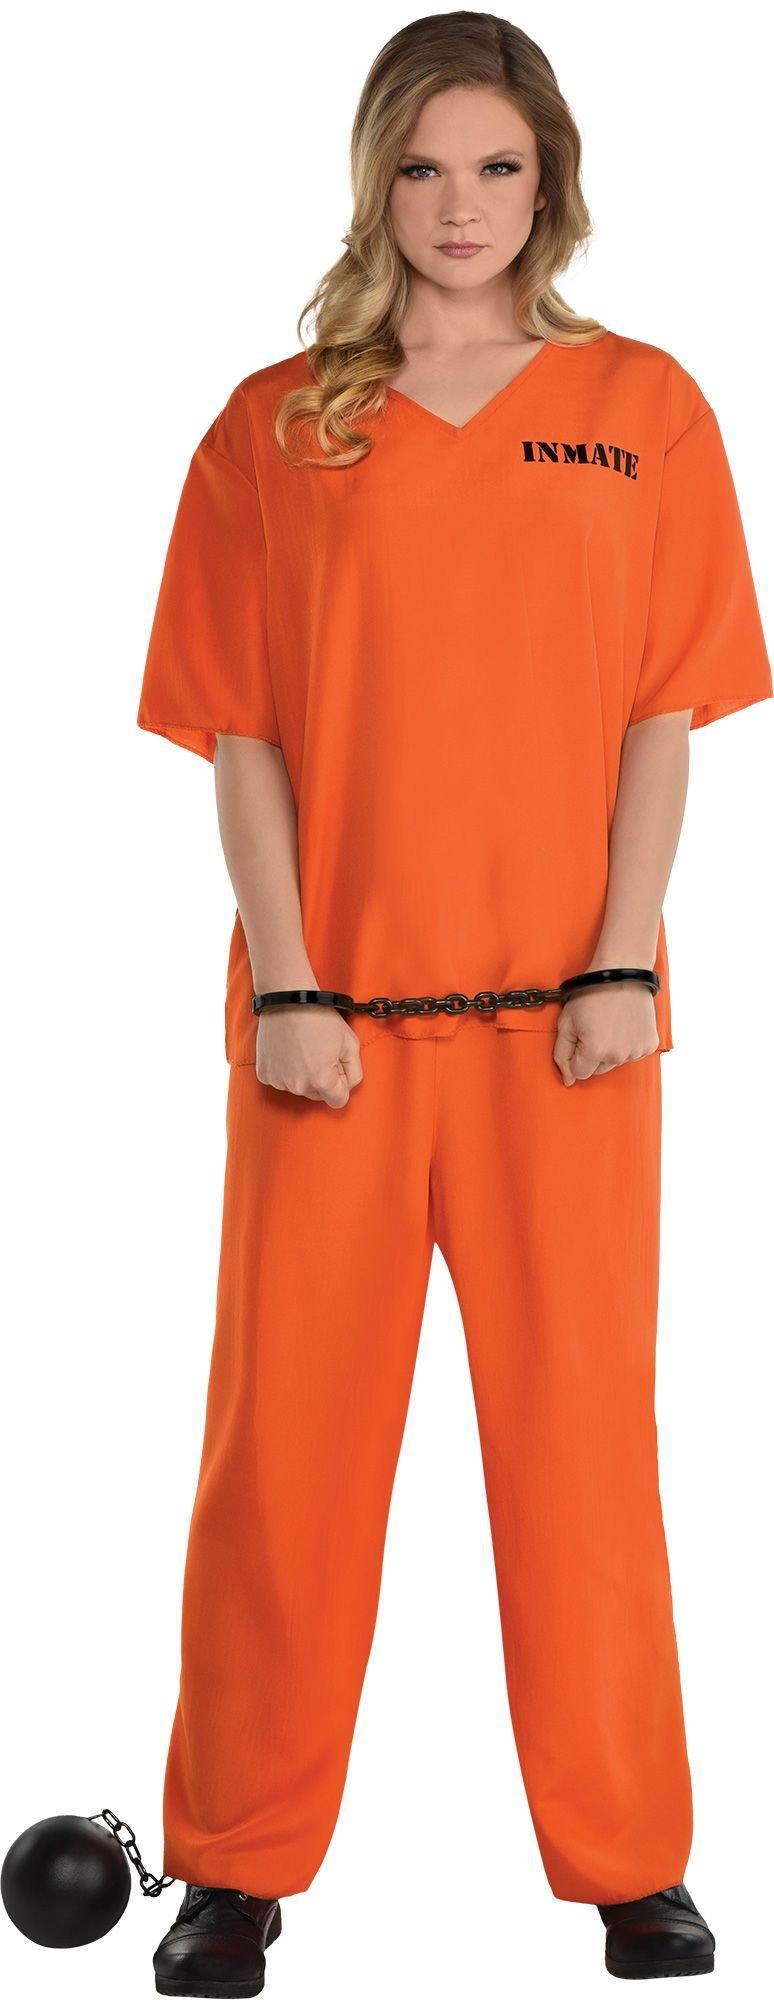 Women S Orange Prisoner Costume Party City